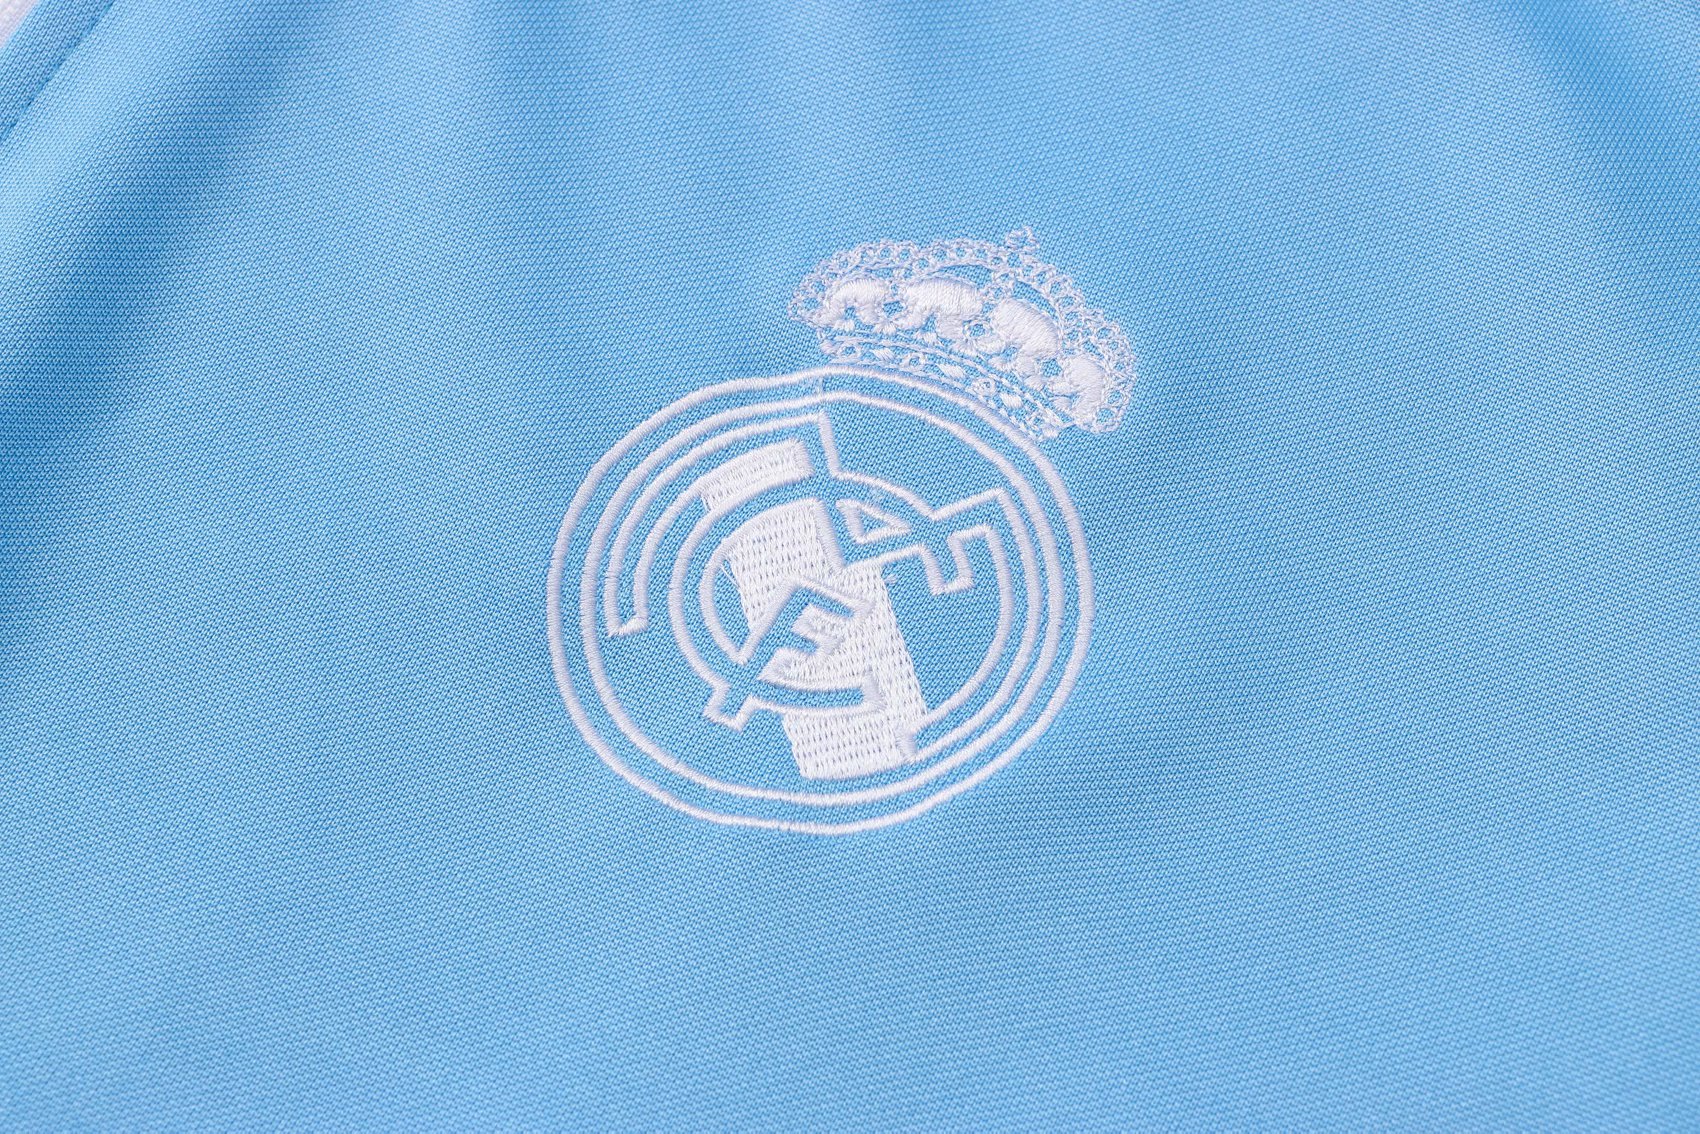 Real Madrid Soccer Training Suit Jacket + Pants Blue Mens 2021/22